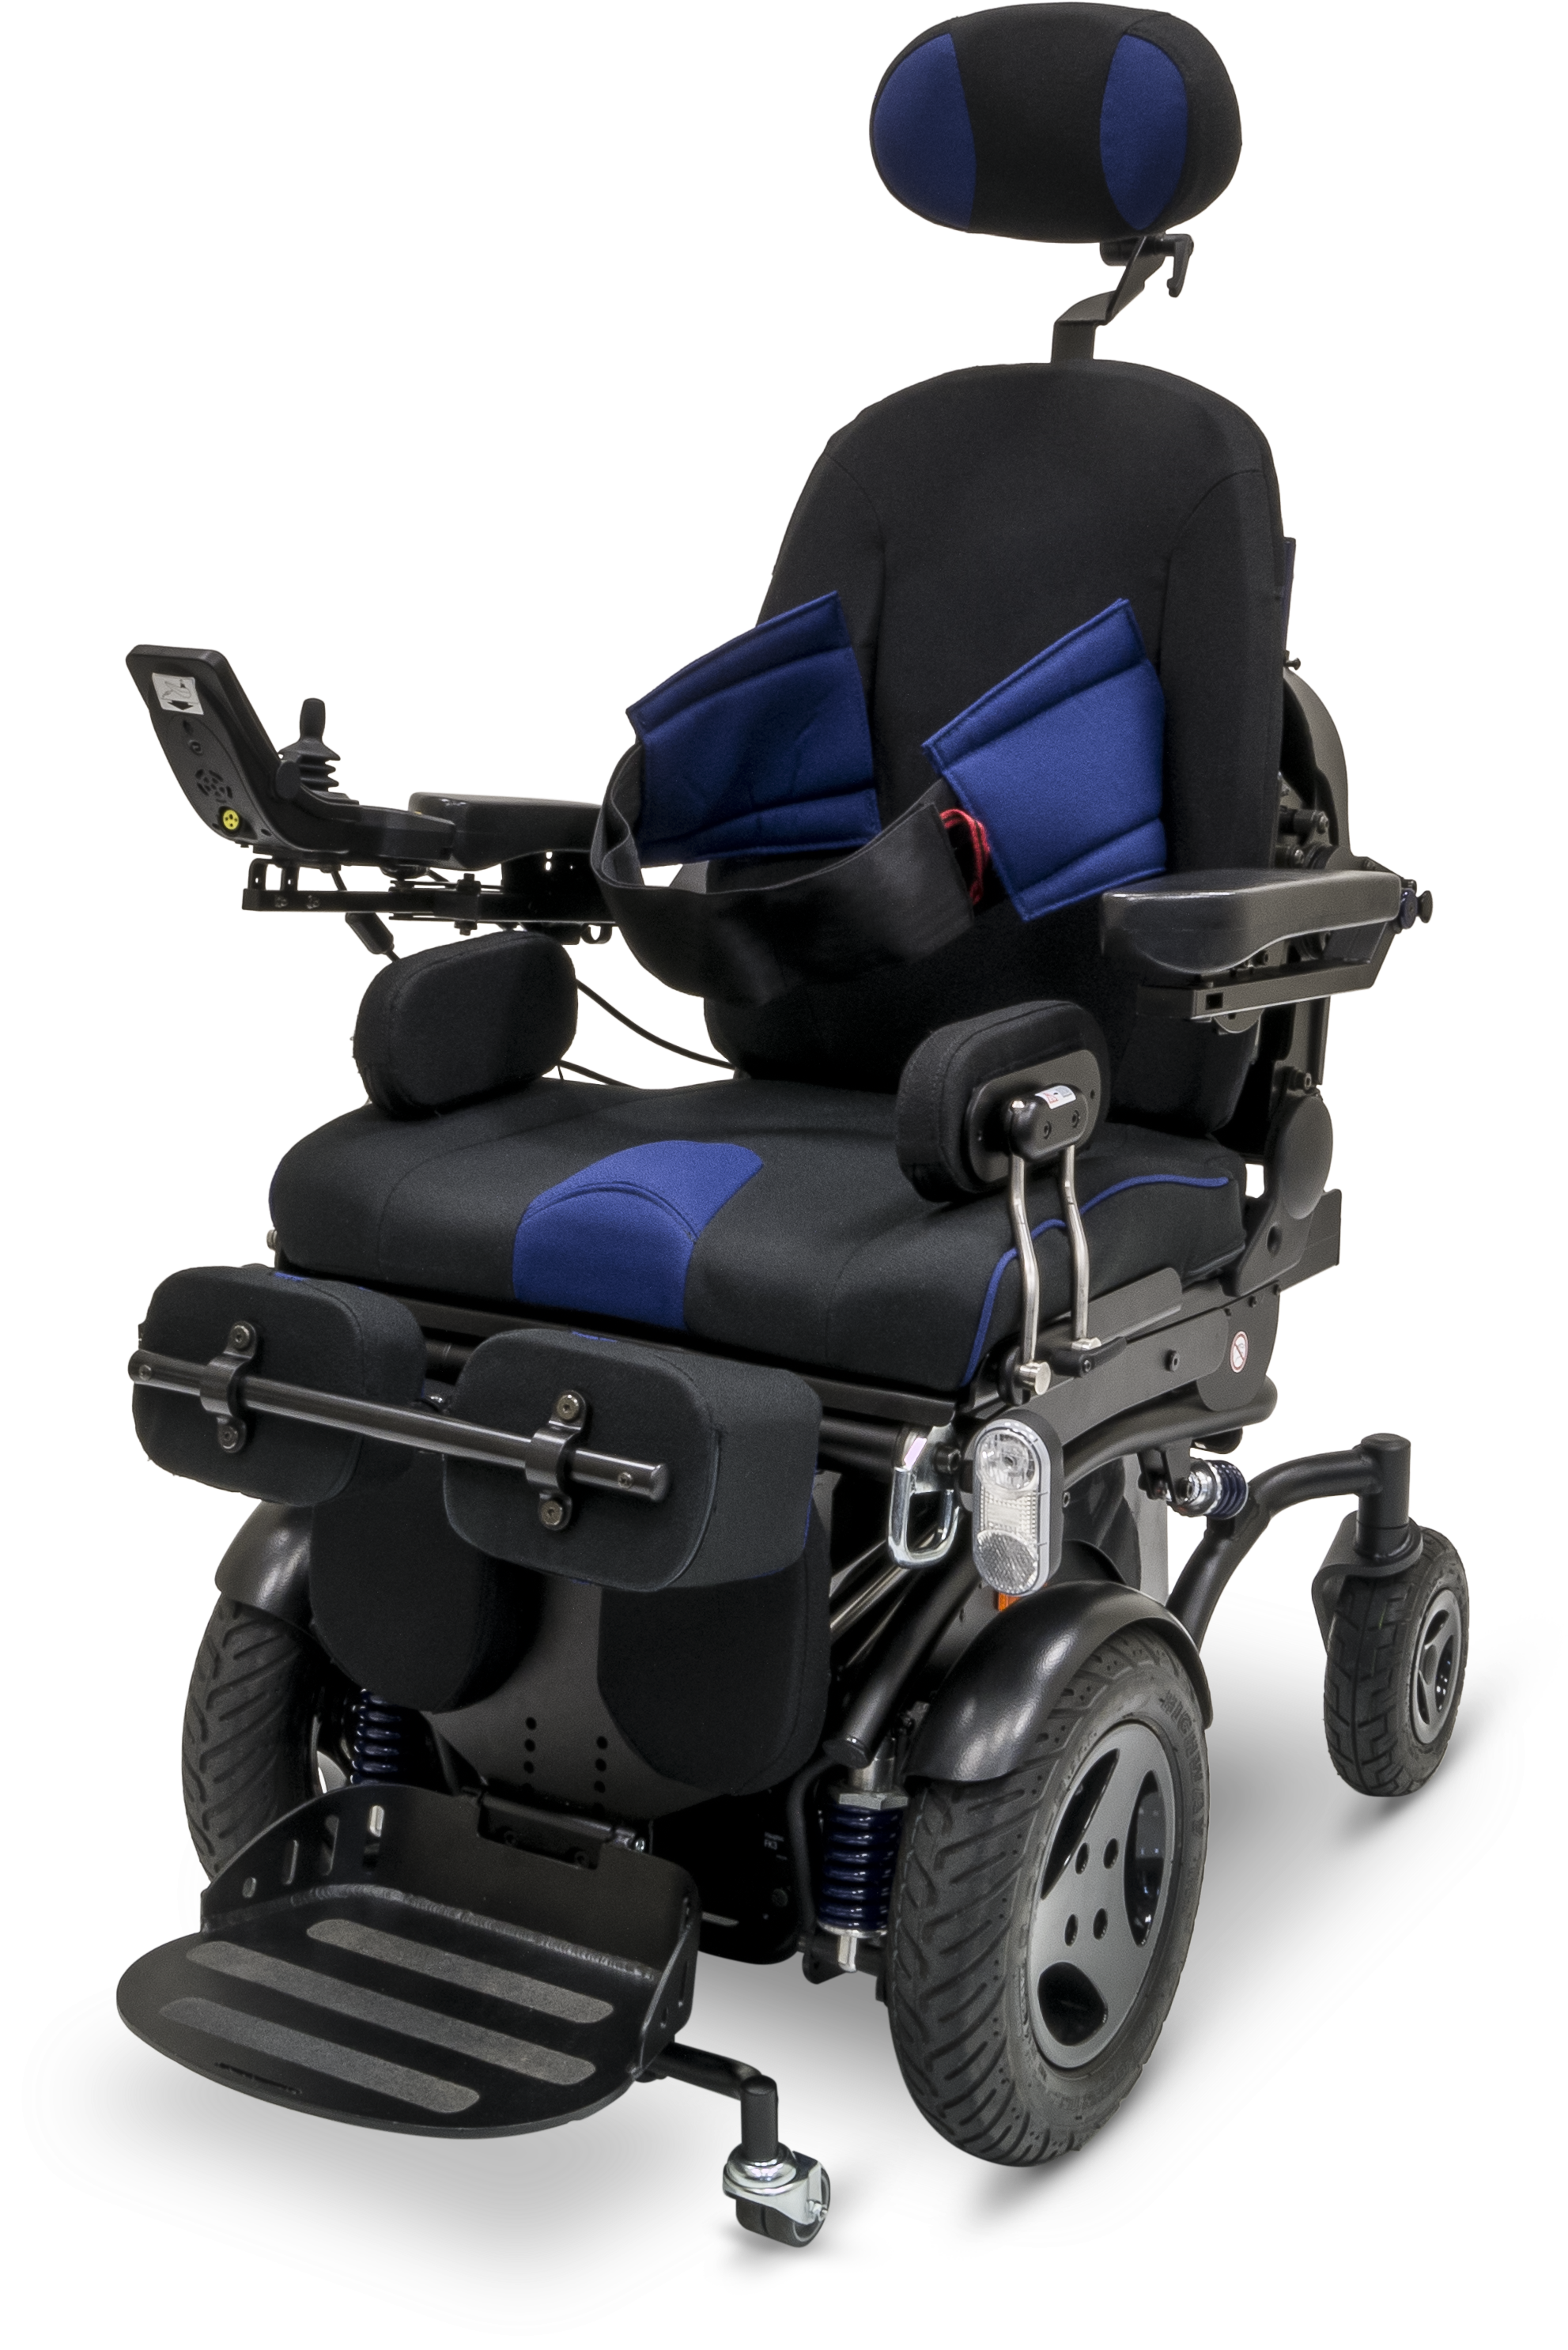 Stephen Hawking Png - Stephen Hawking Wheelchair Design (3576x3448), Png Download